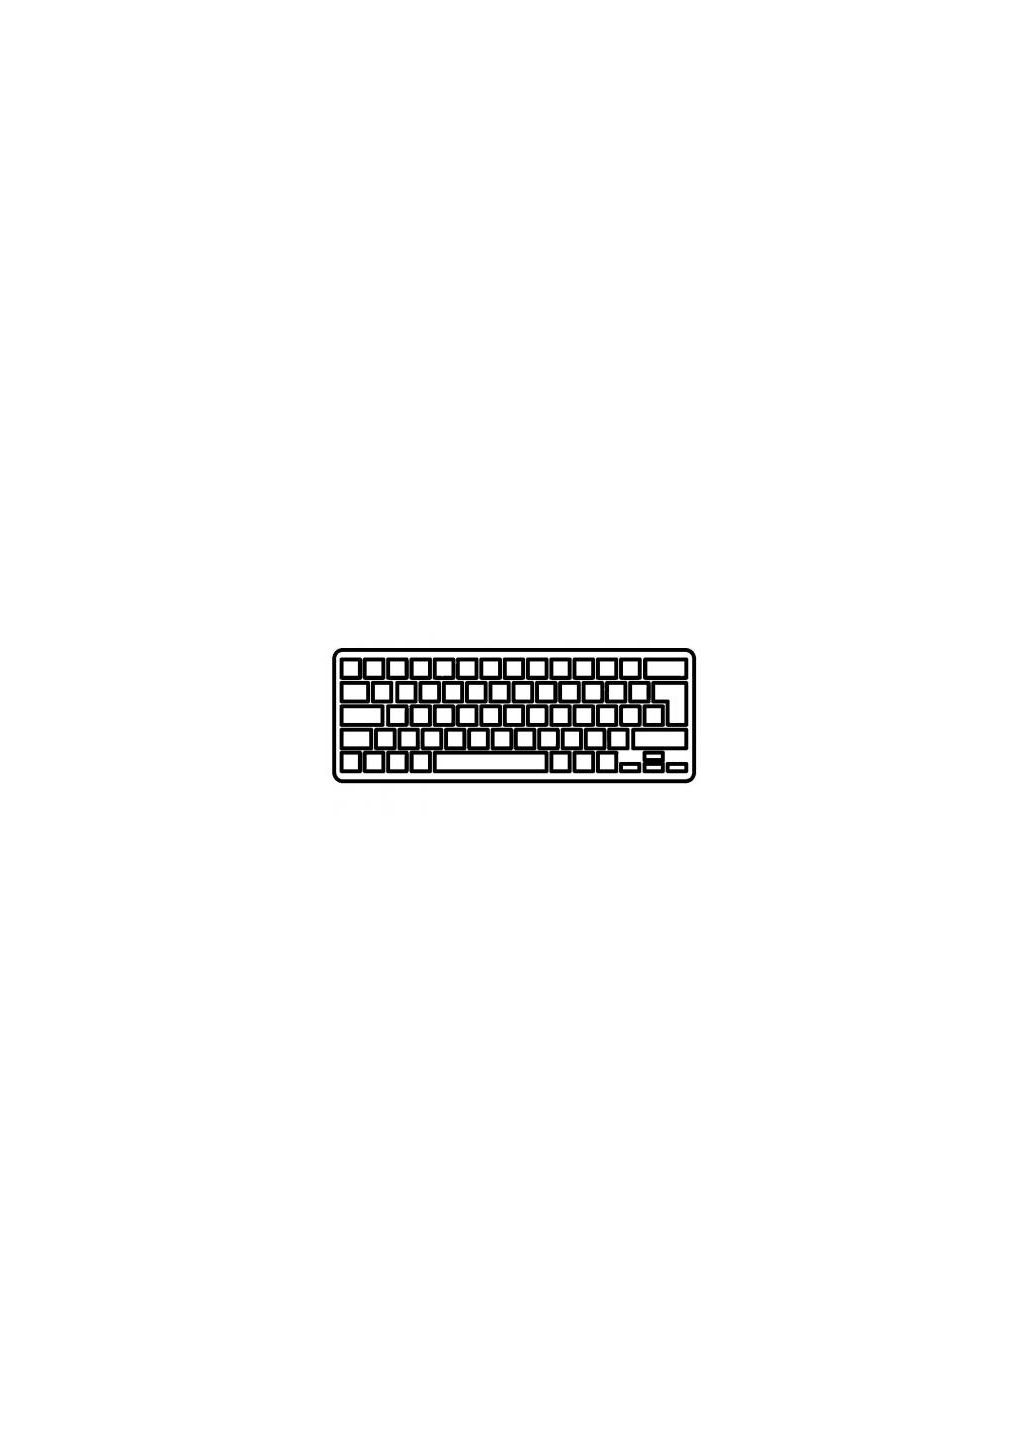 Клавиатура ноутбука Pro 15.4 A1286 (20092012) black,wo/frame,backlight UA/US (A46009) Apple pro 15.4 a1286 (2009-2012) black, wo/frame, backligh (276707499)